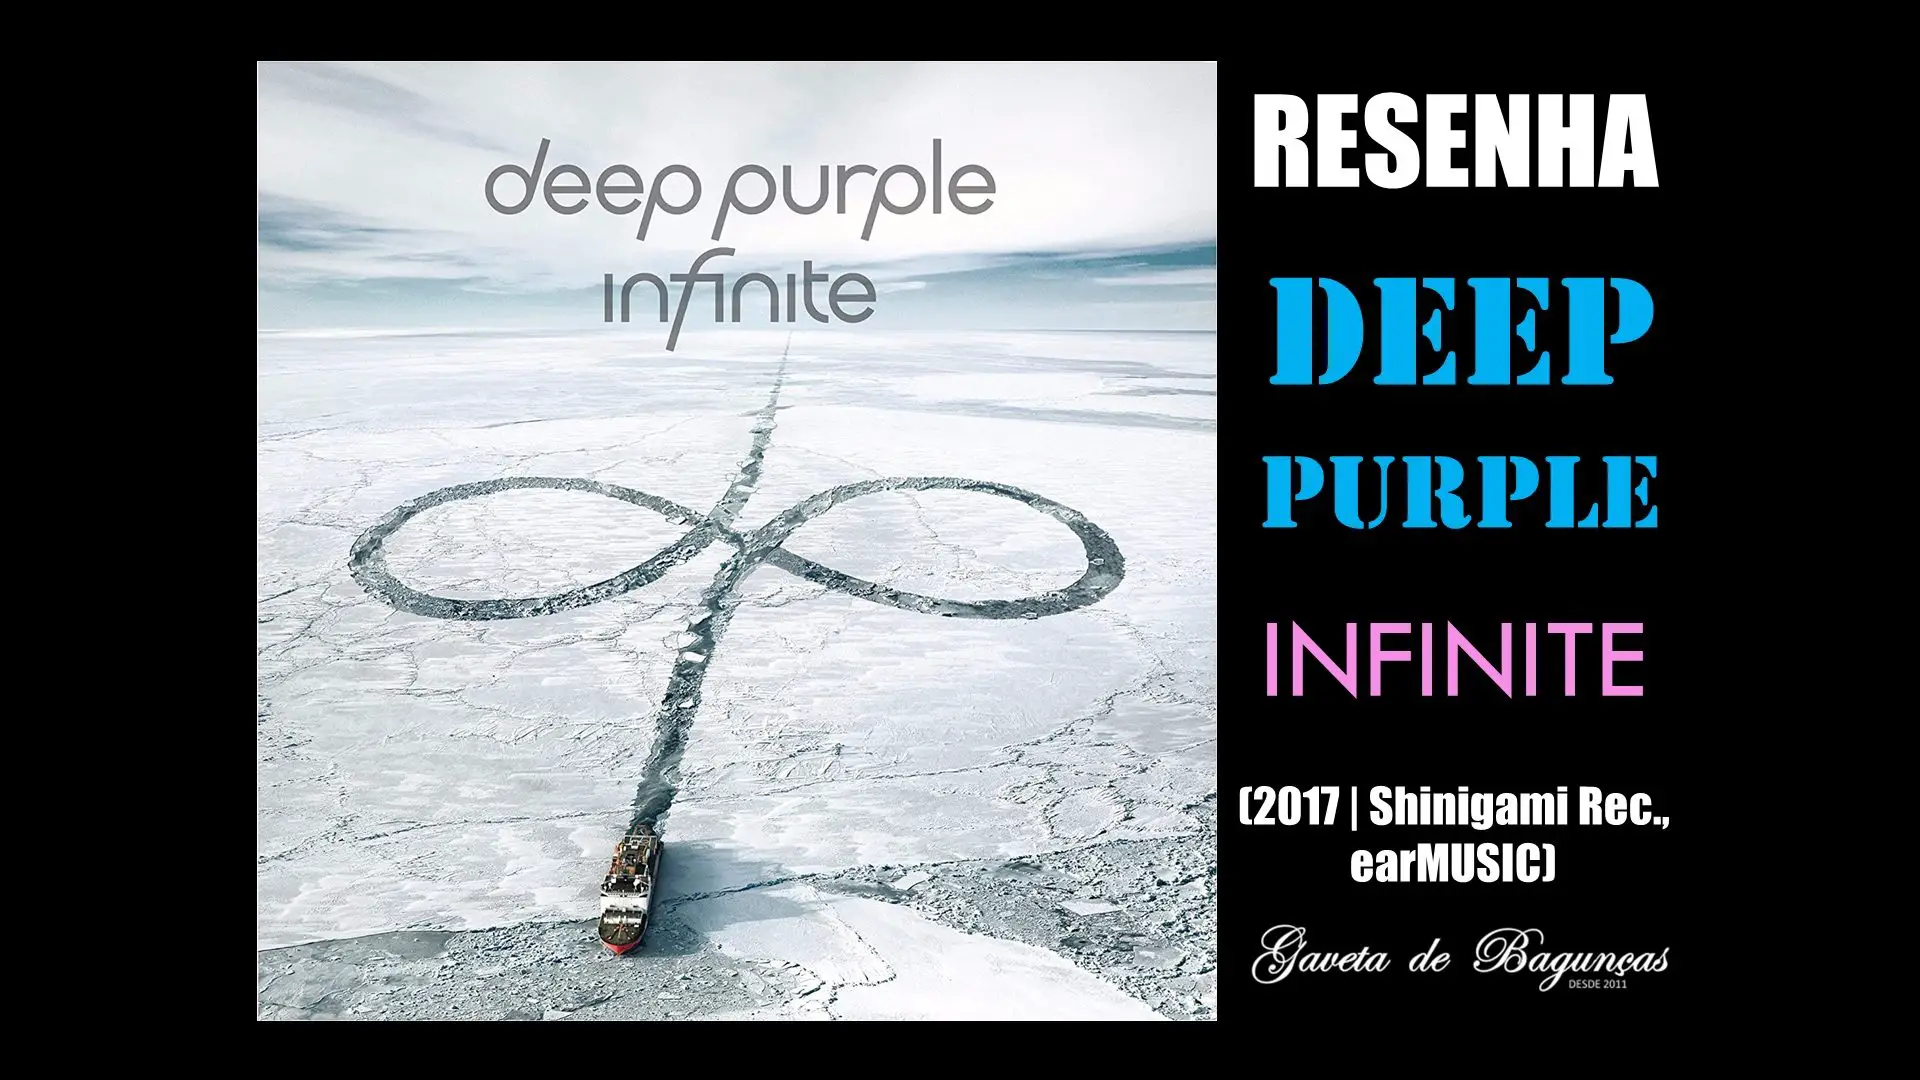 Deep Purple - InFinite (2017, Shinigami Records, earMUSIC) rESENHA Review